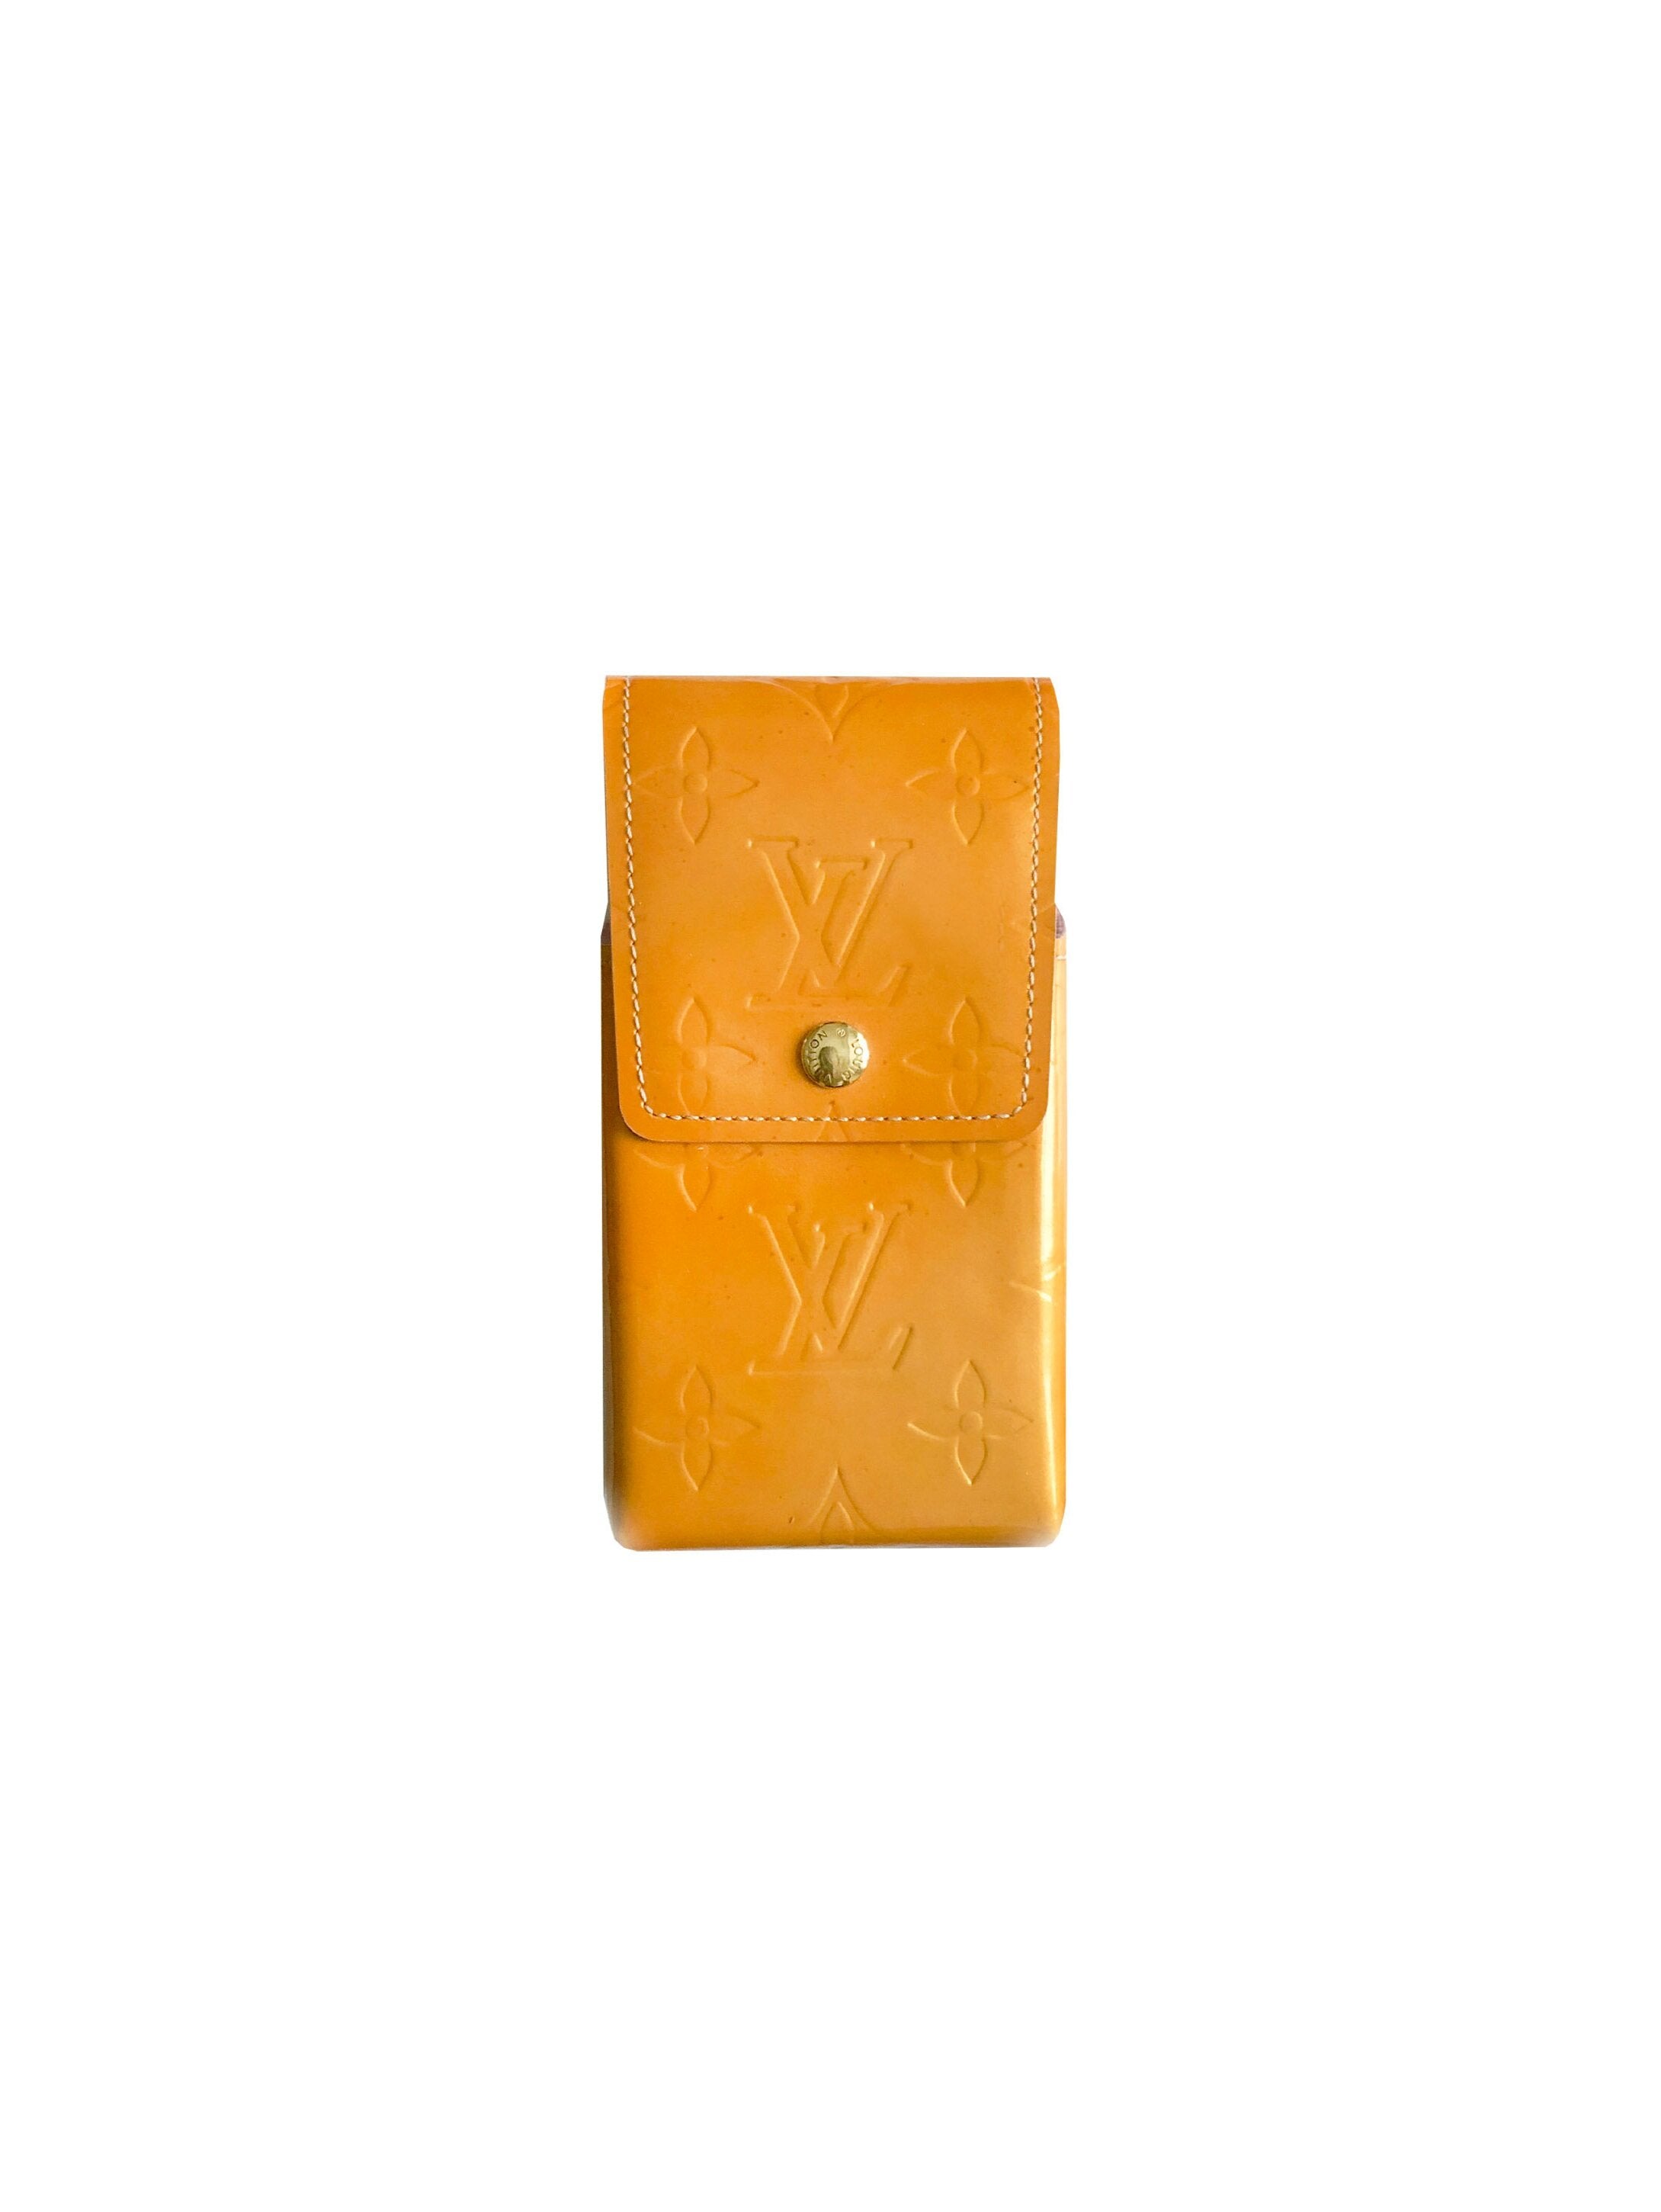 Louis Vuitton 2000s Yellow Cigarette Case (Strap Included)